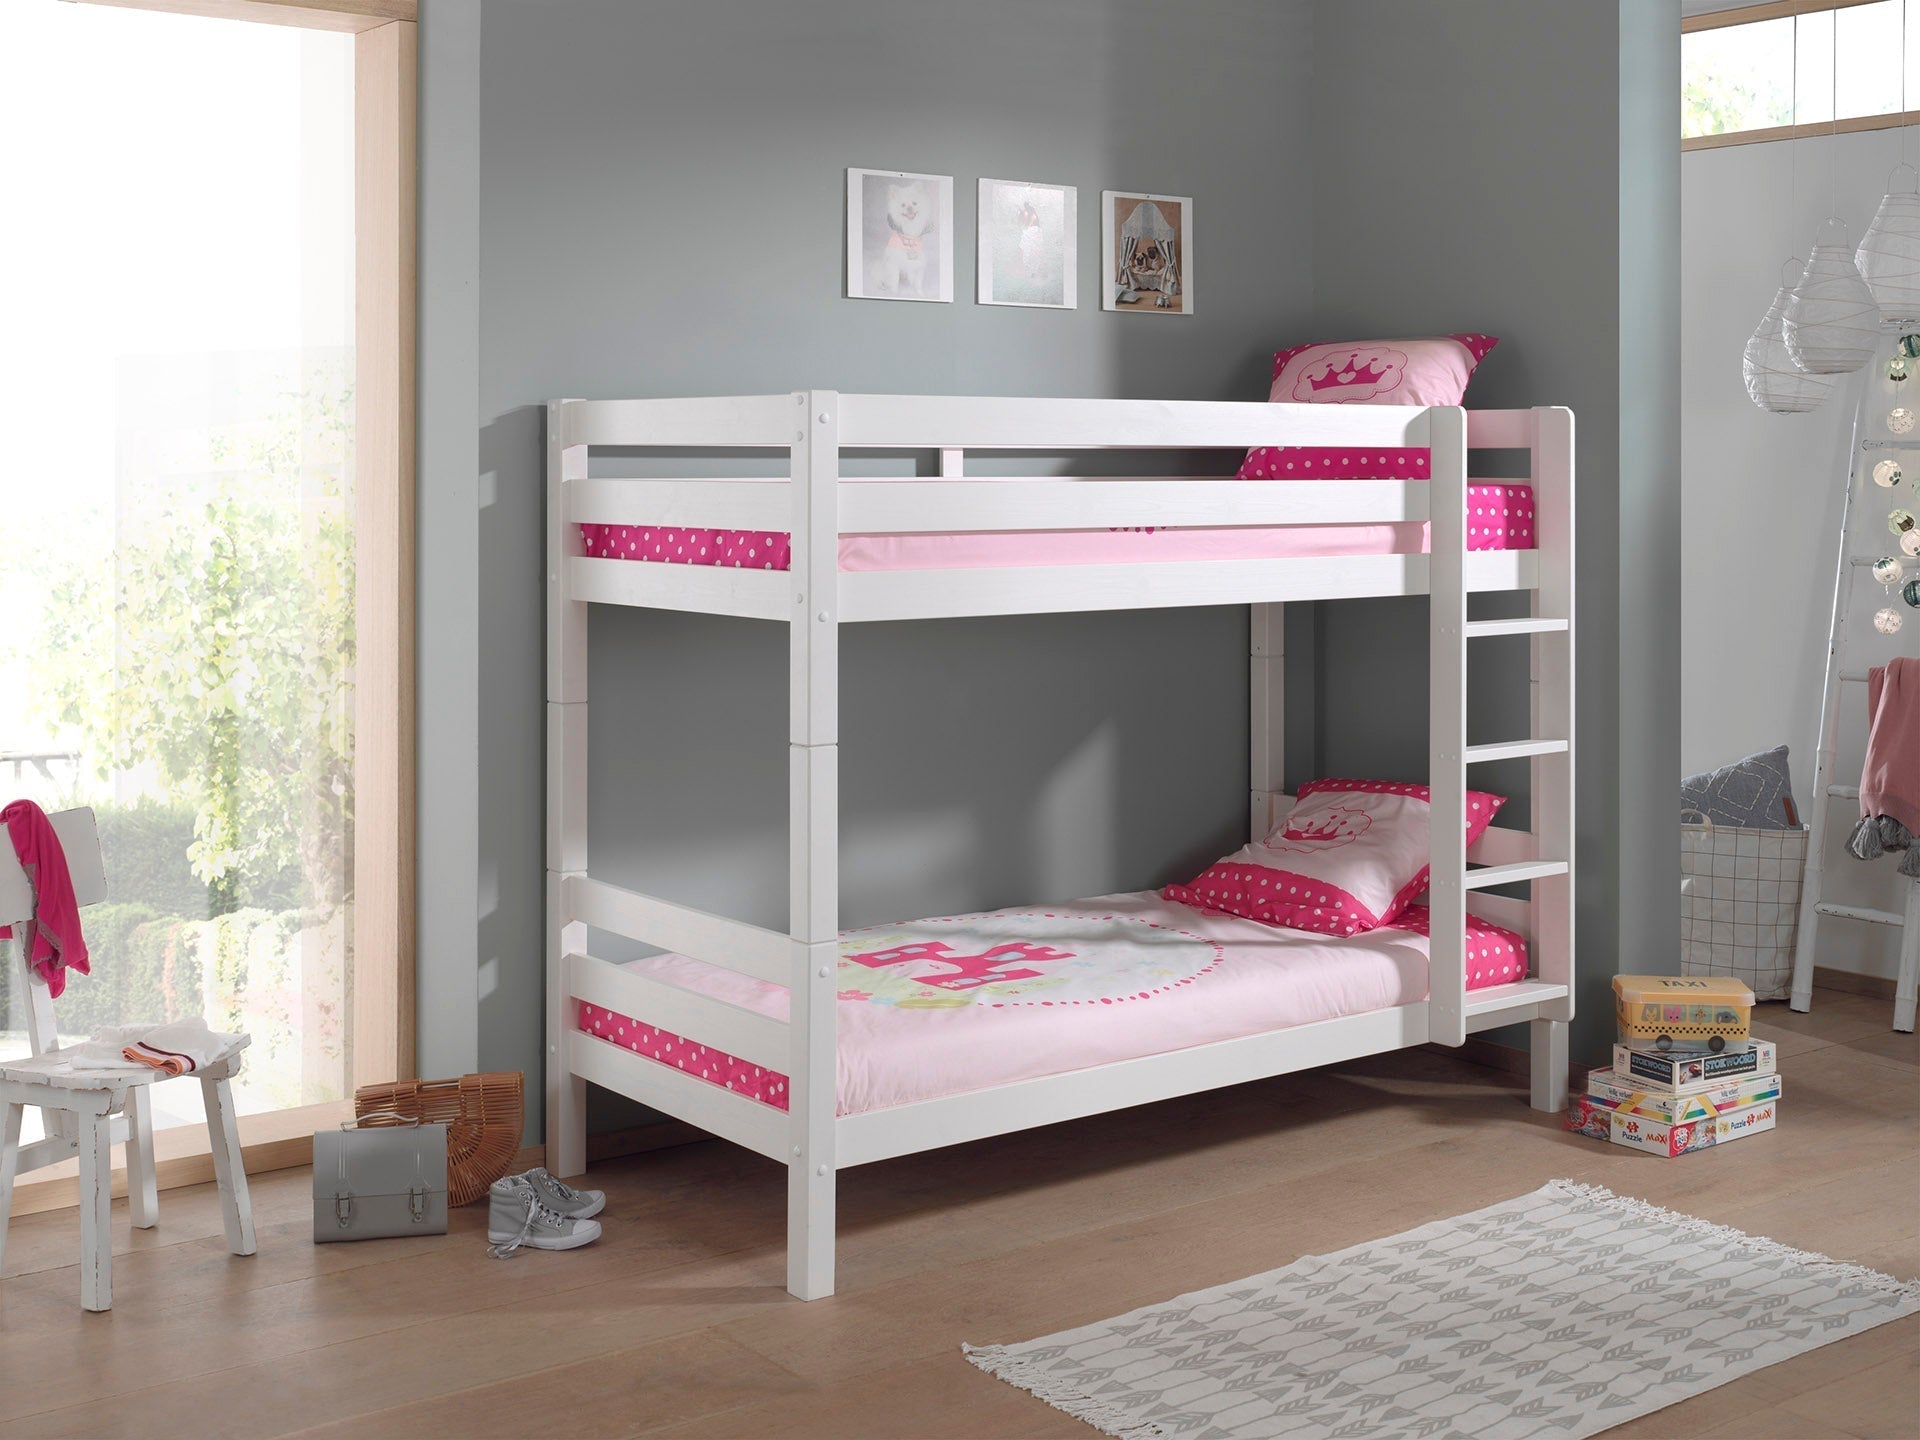 Vipack Pino Kids Bunk Bed - 160cm Height - White